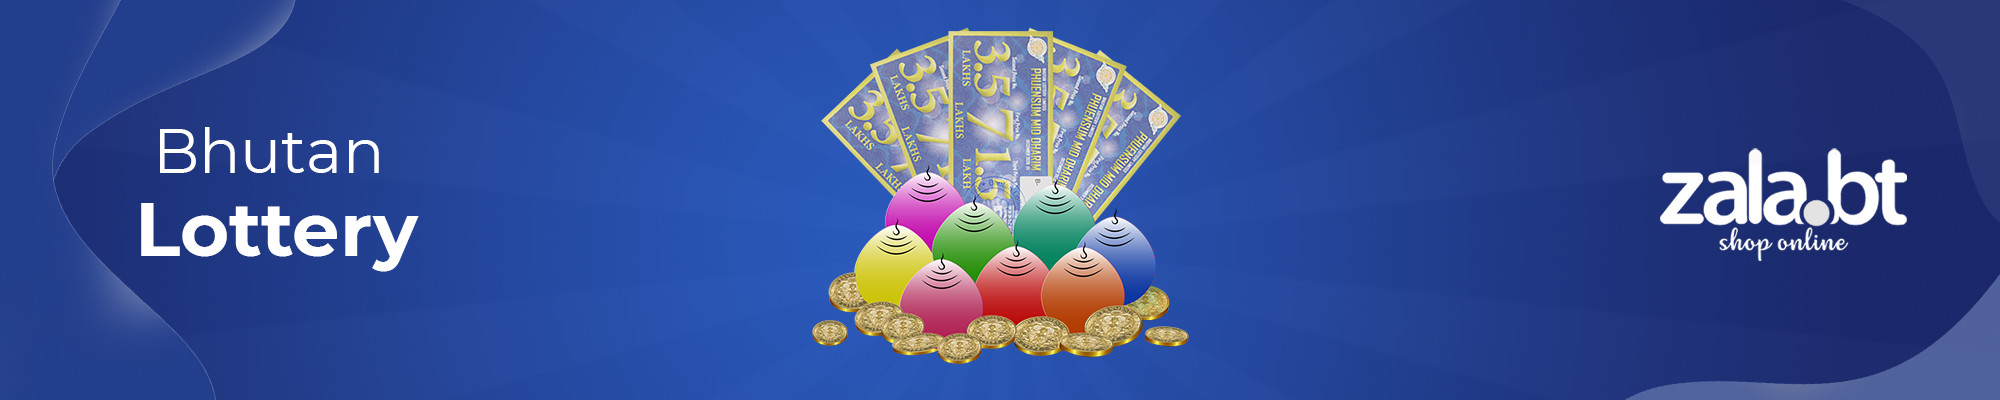 Bhutan Lottery